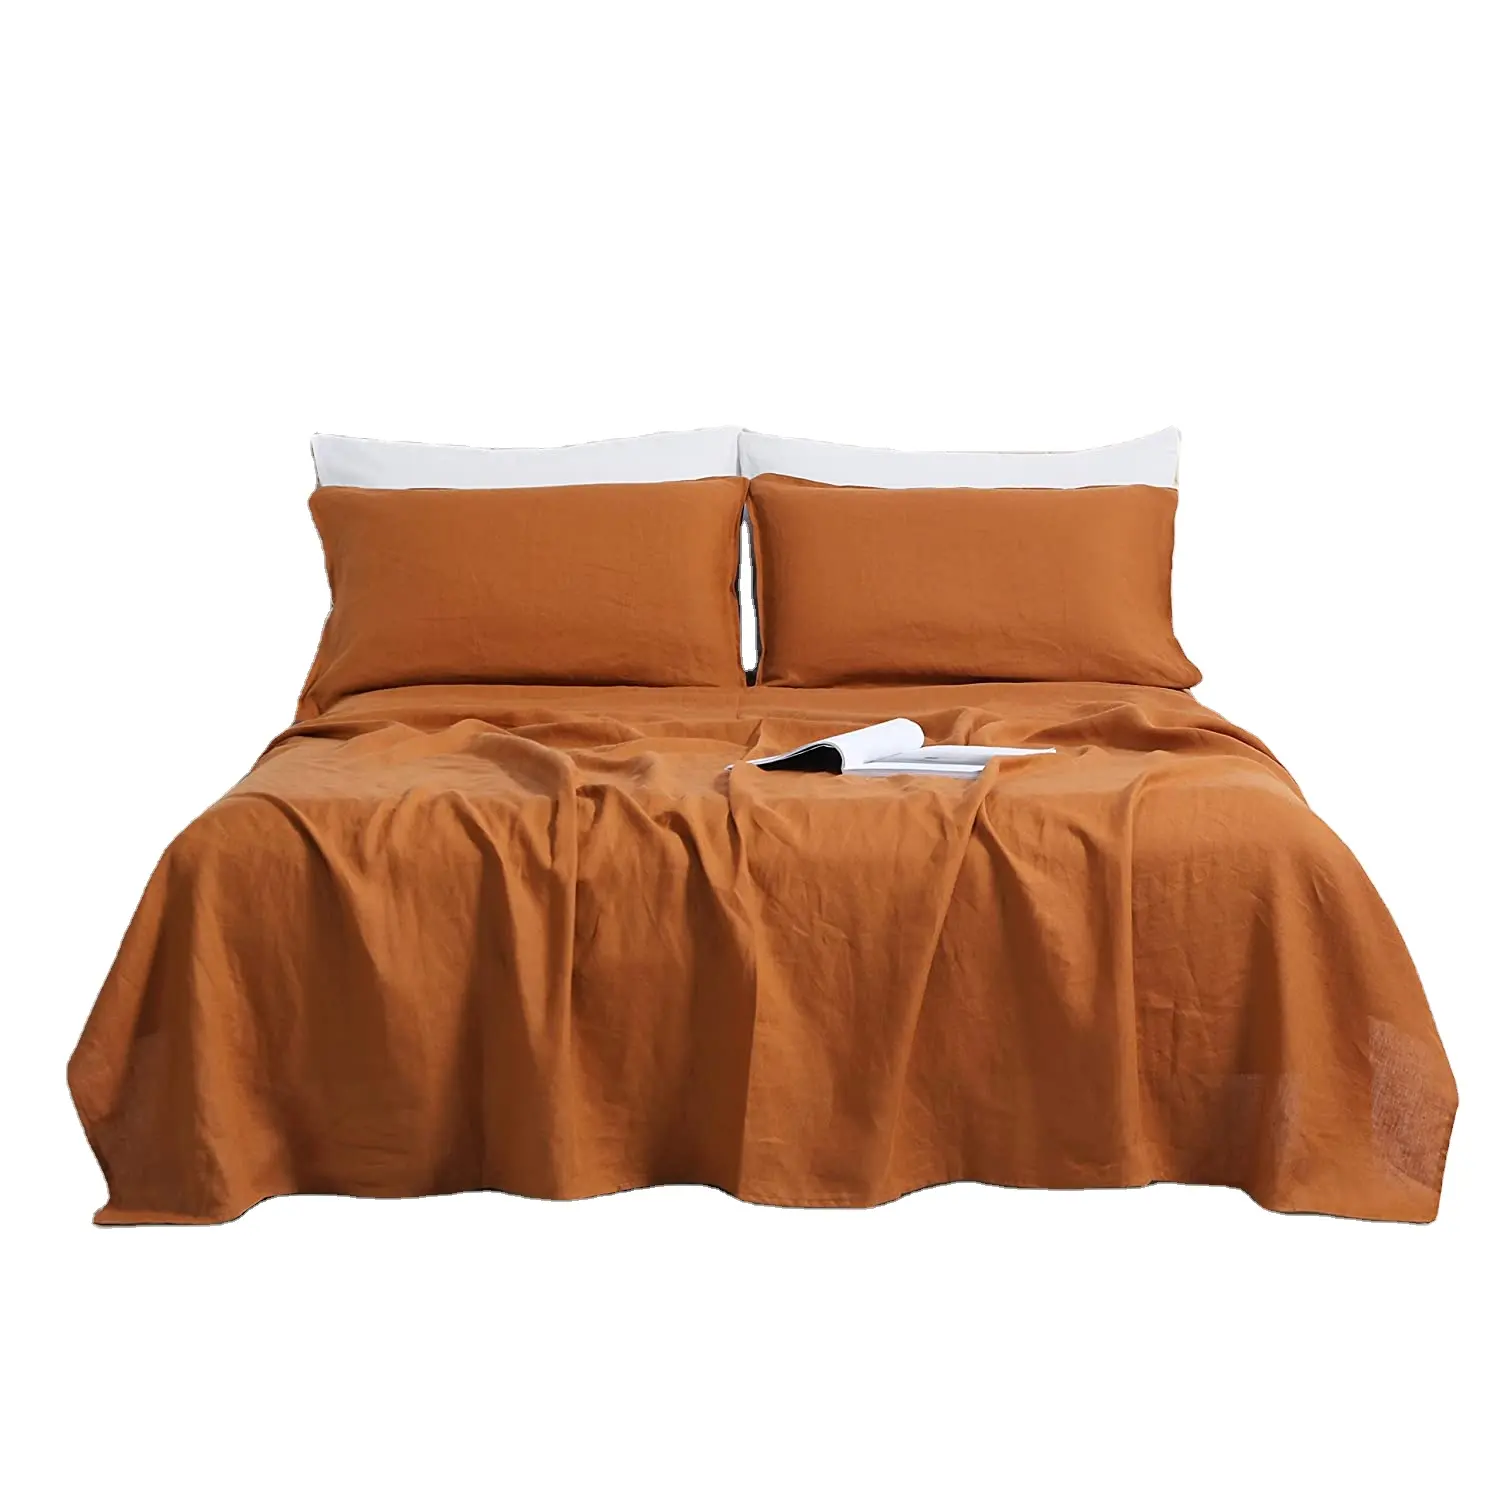 100% Stonewashed फ्रेंच सनी चादरें प्राकृतिक सन होटल सनी बिस्तर सेट